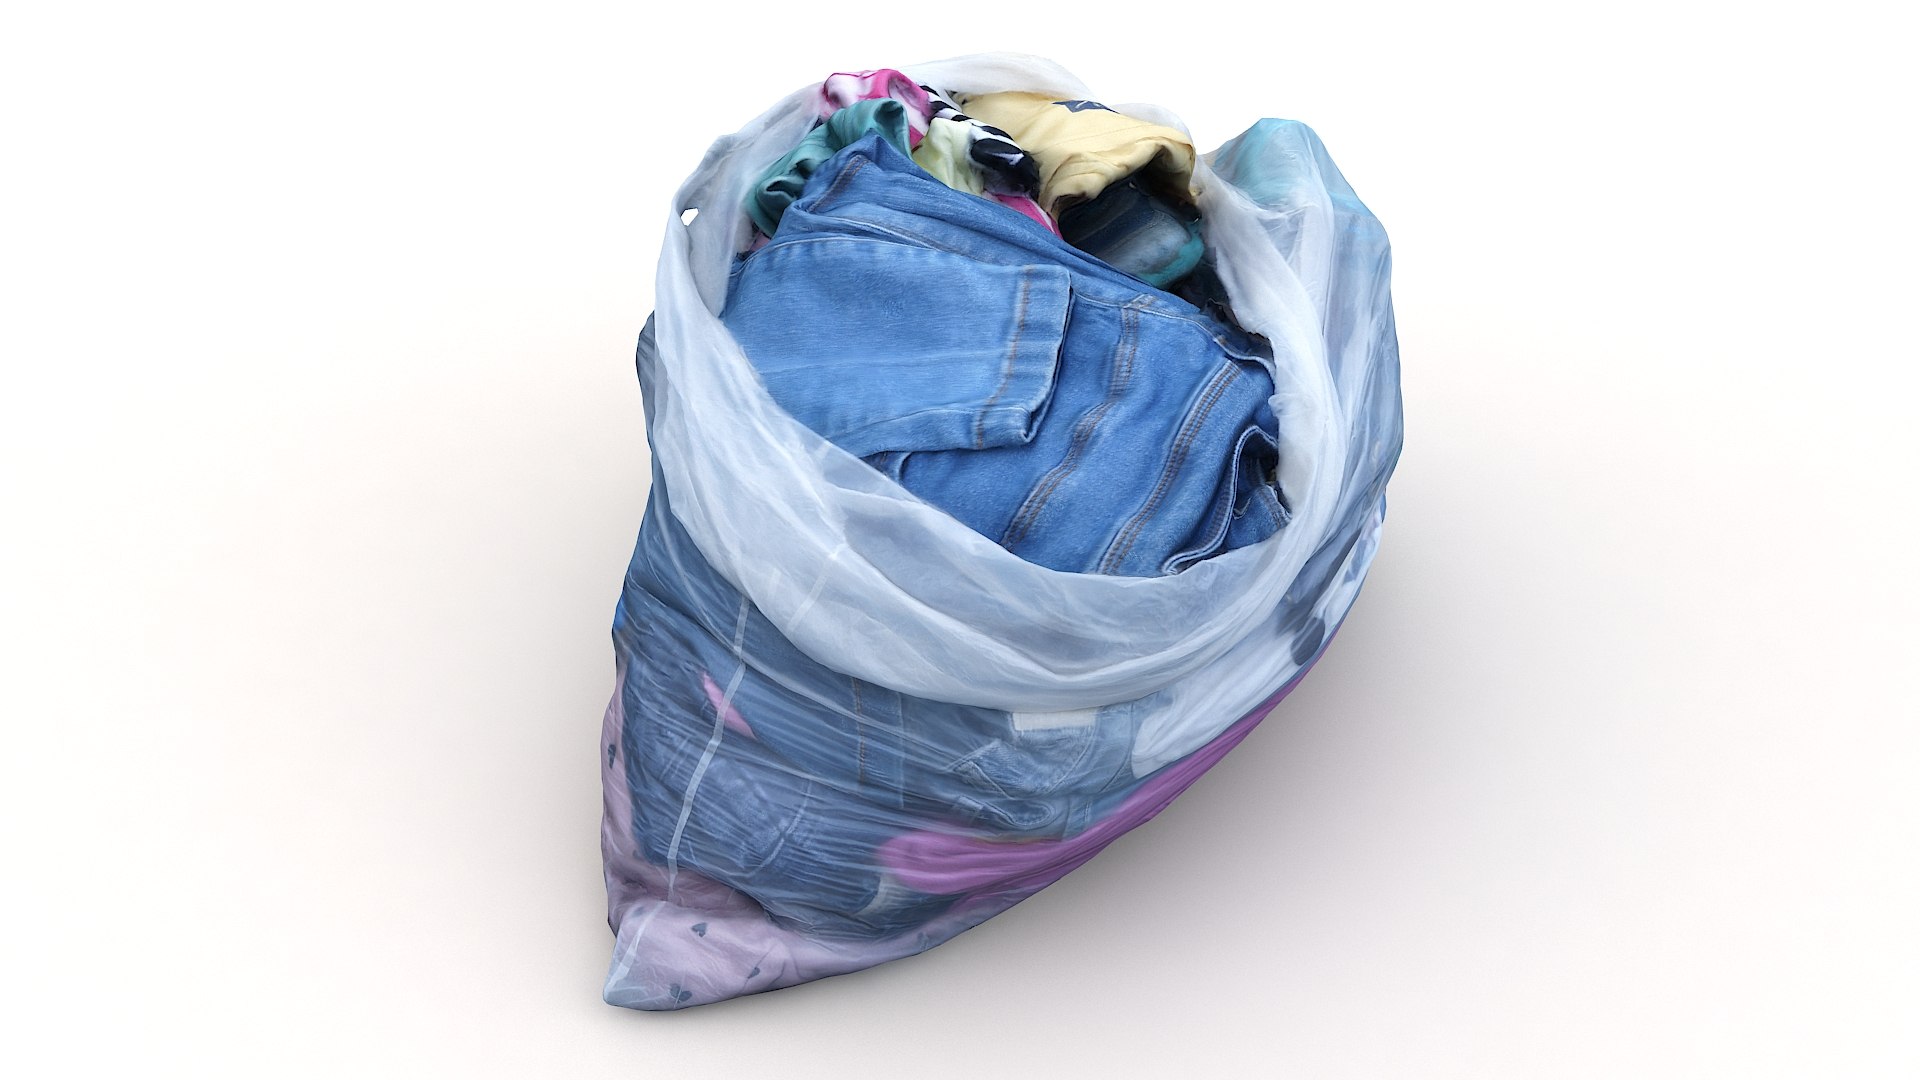 Garbage bag clothes 3D model - TurboSquid 1535497